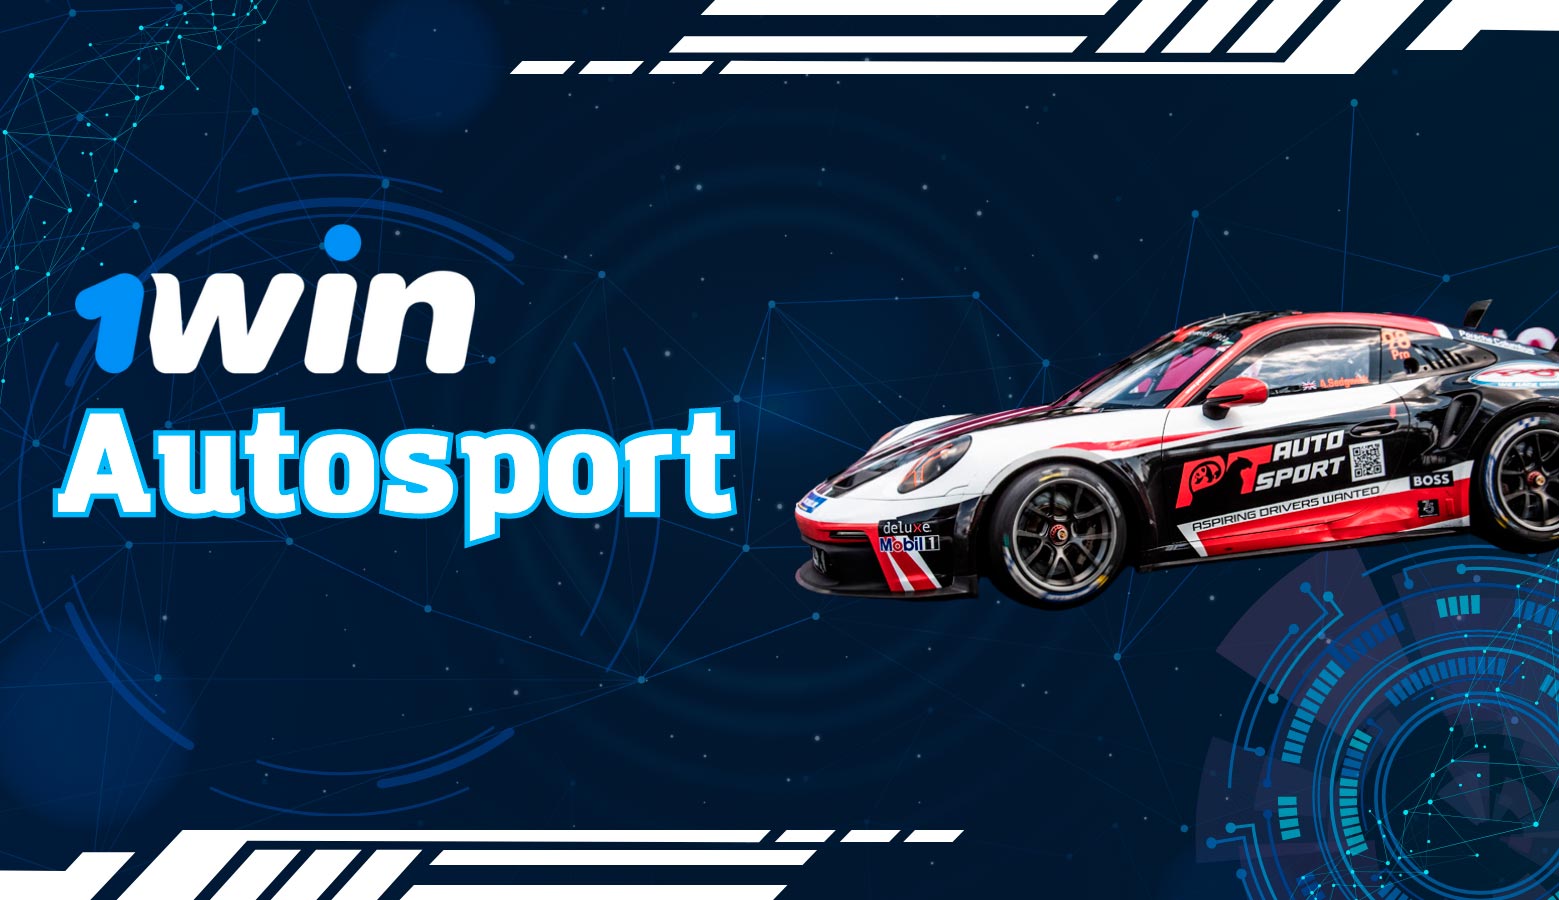 Autosport 1win